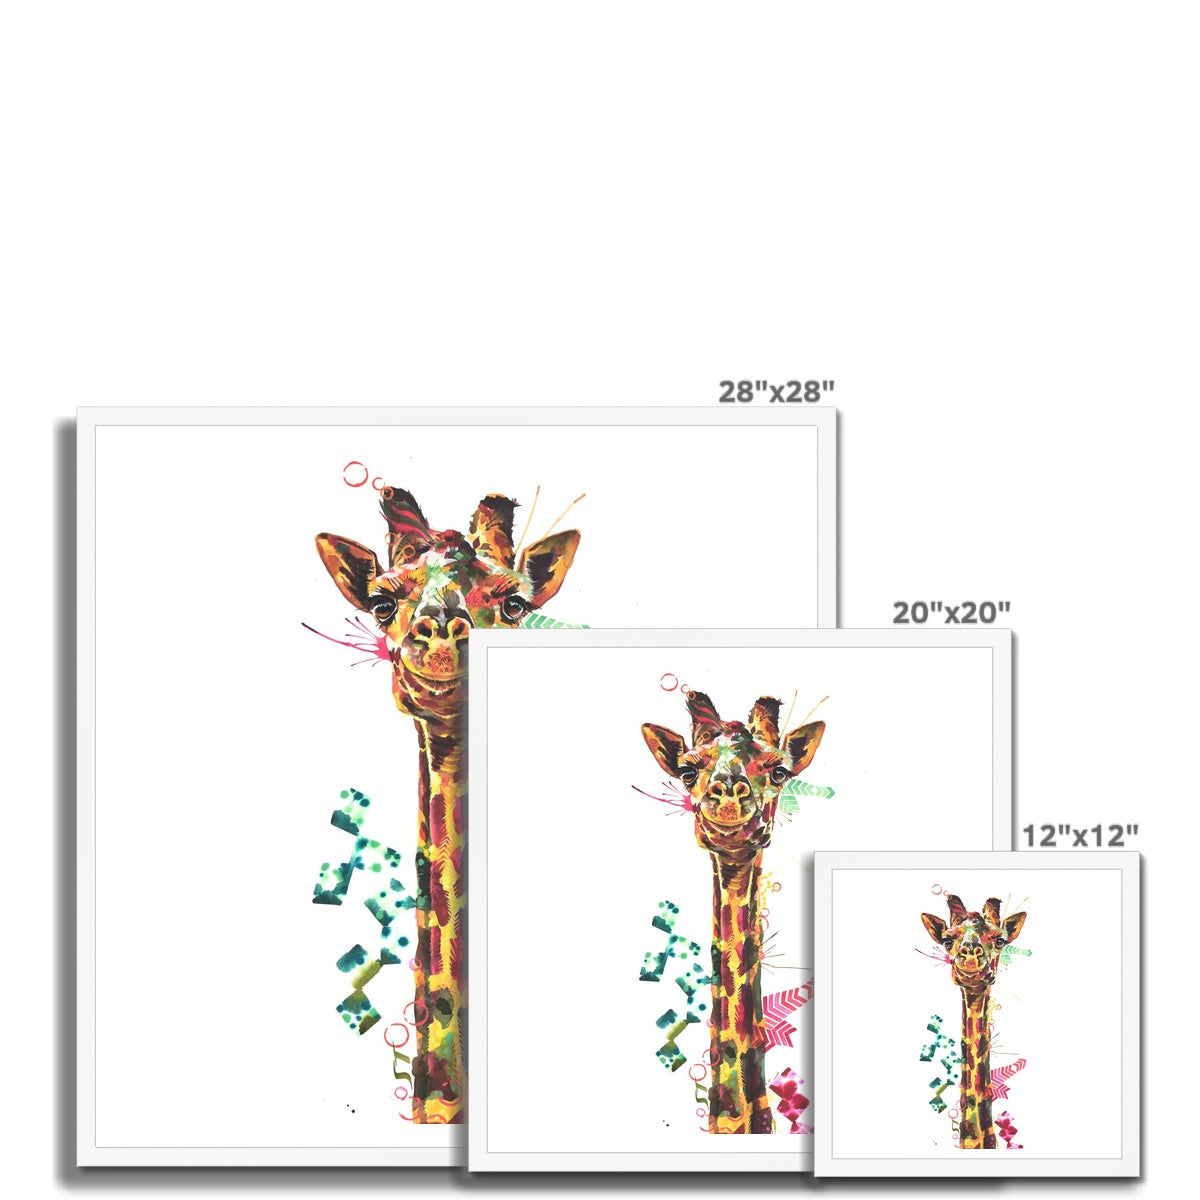 Gerald the Giraffe Framed Print